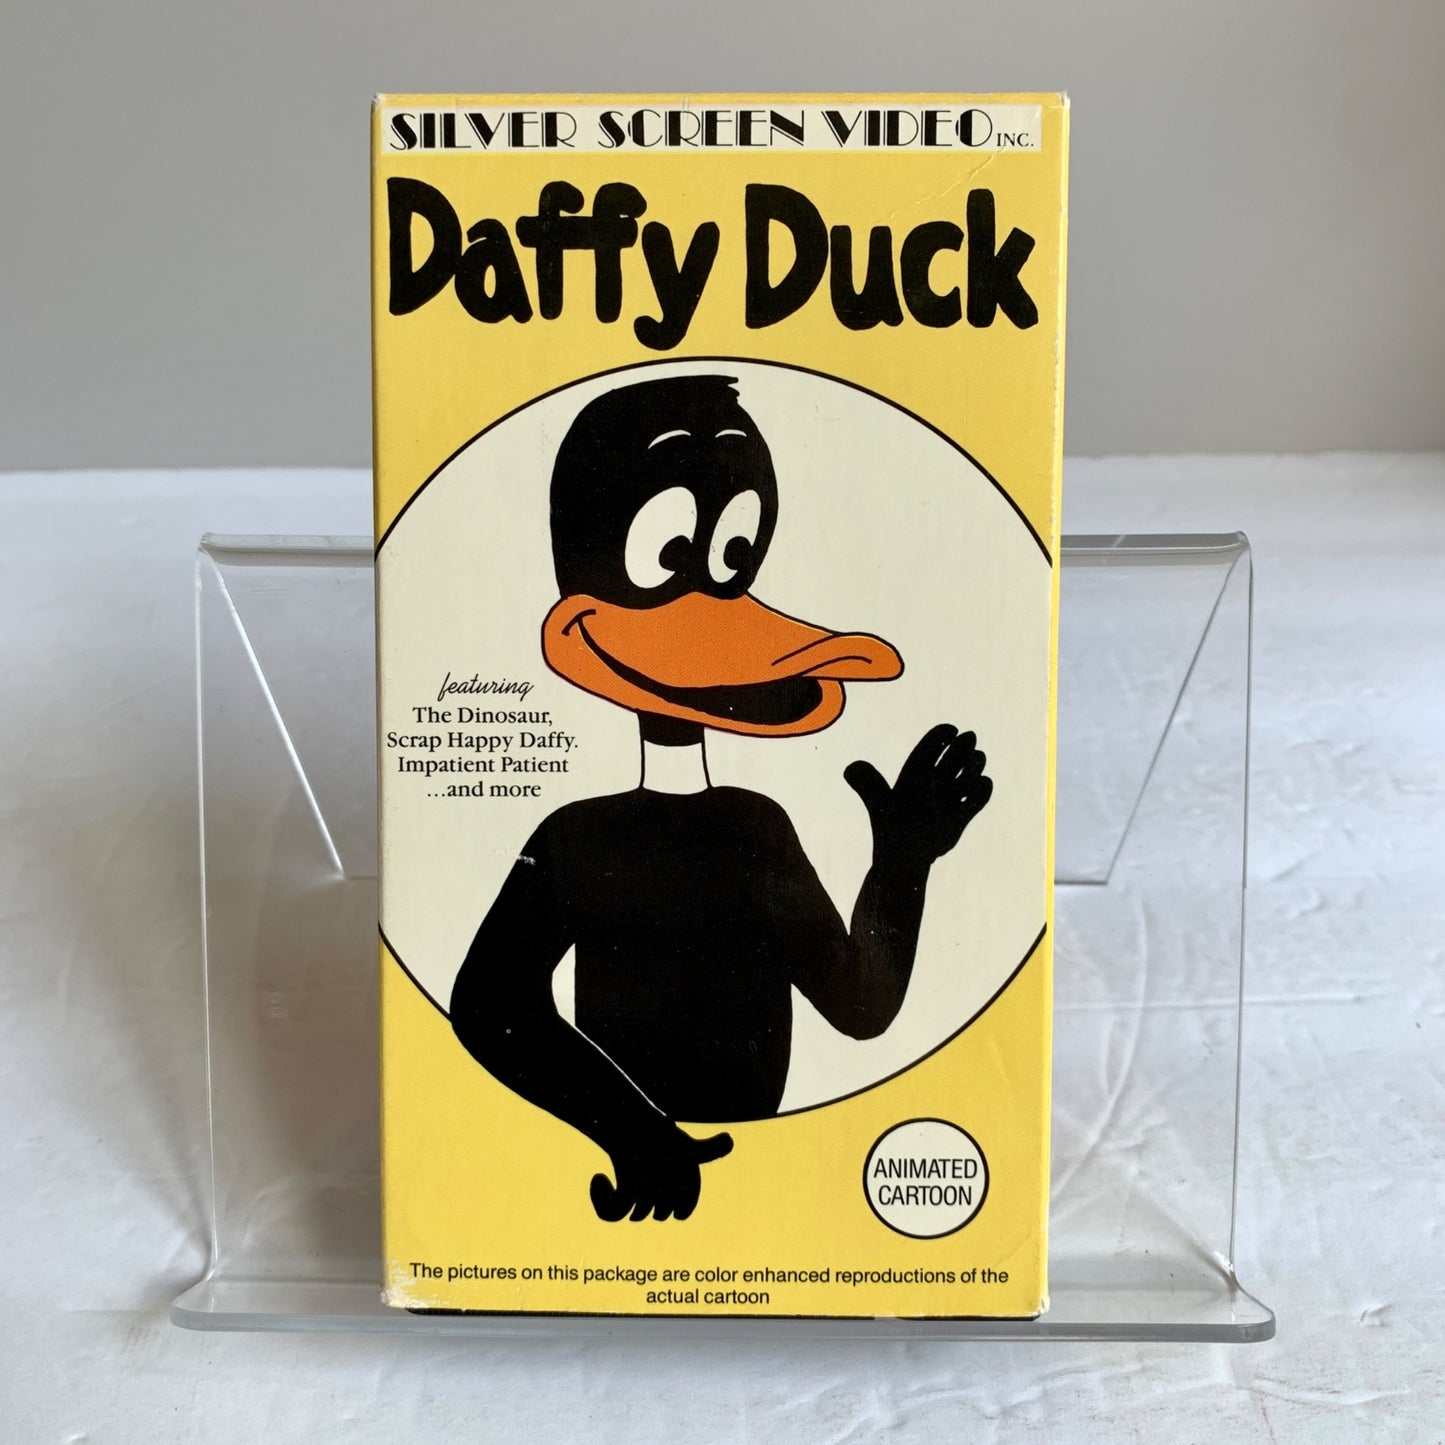 Daffy Duck Silver Screen Video VHS